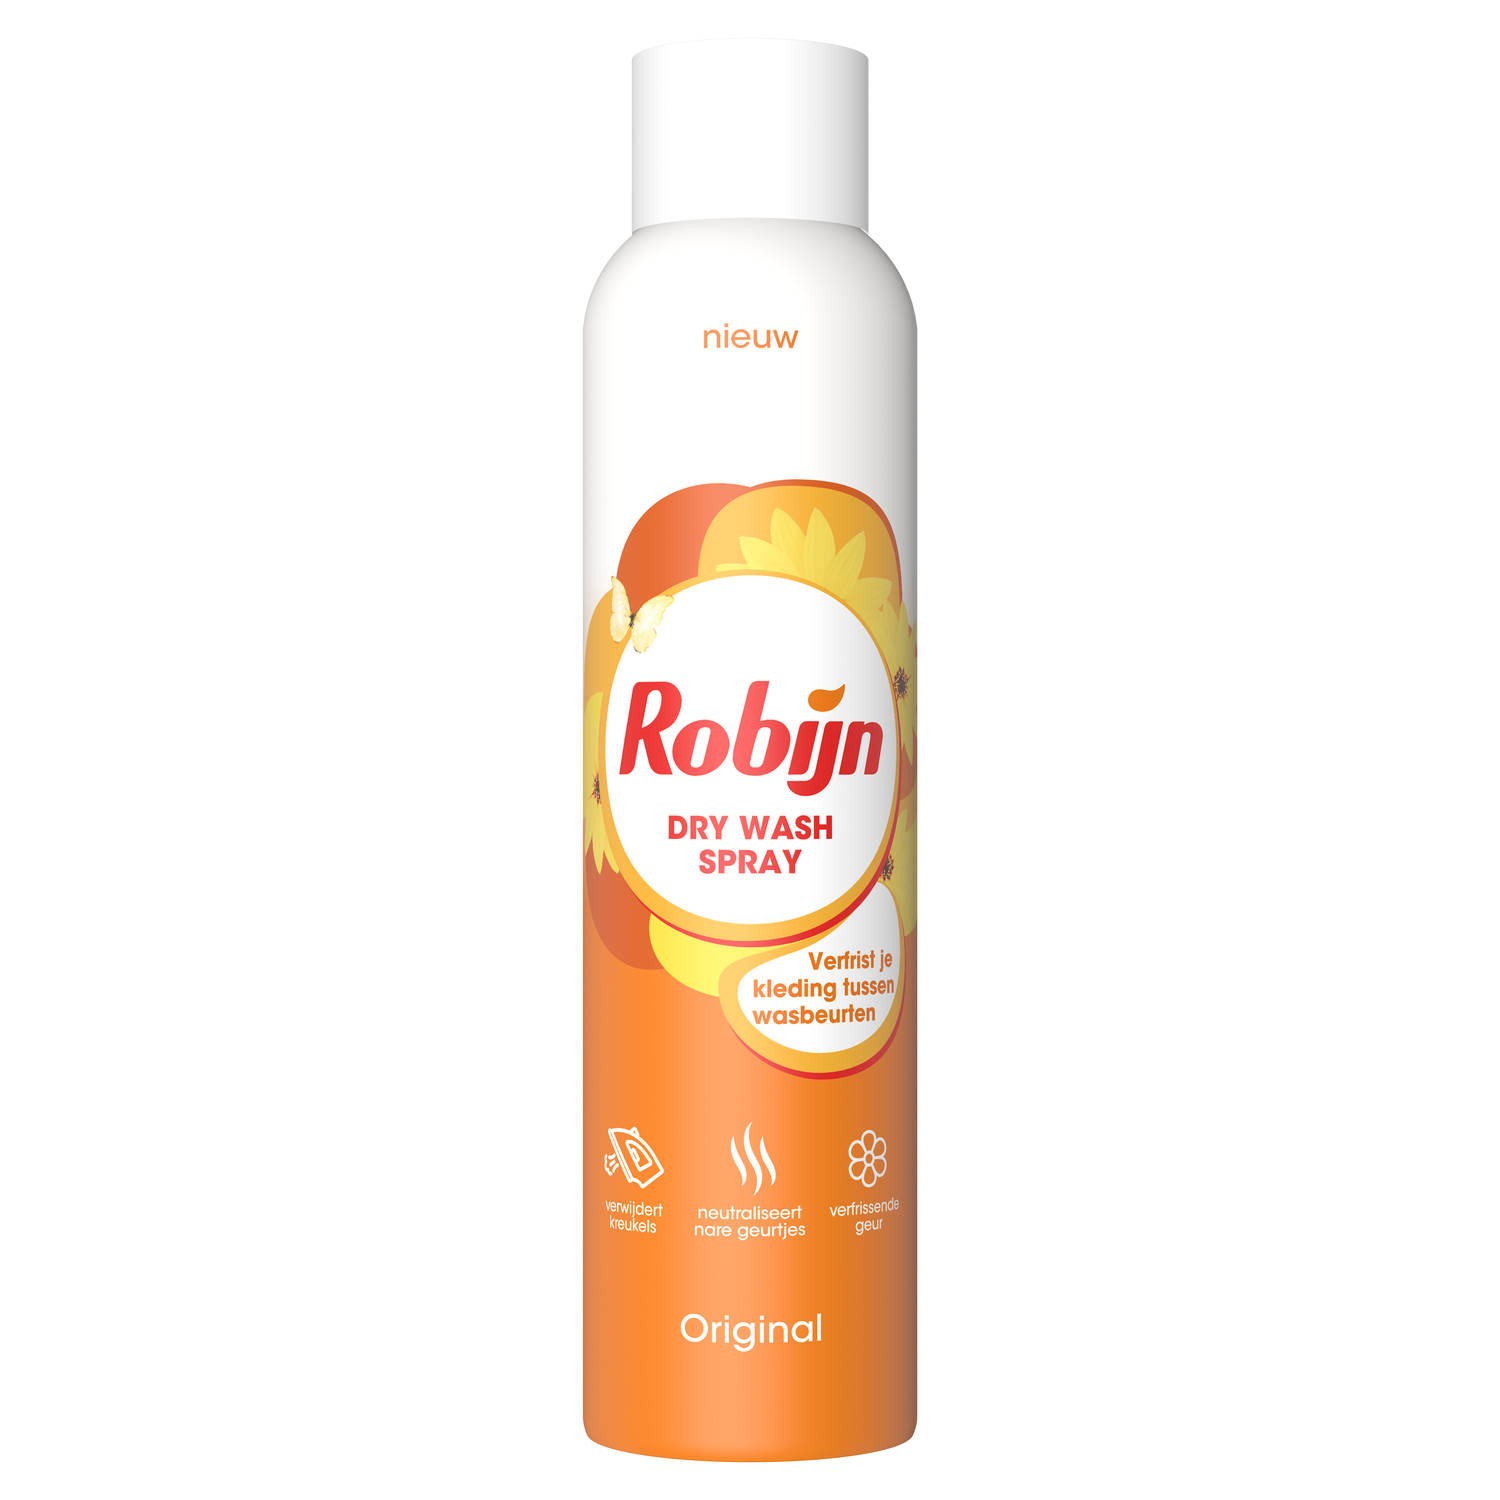 Robijn Dry Wash Spray Original​